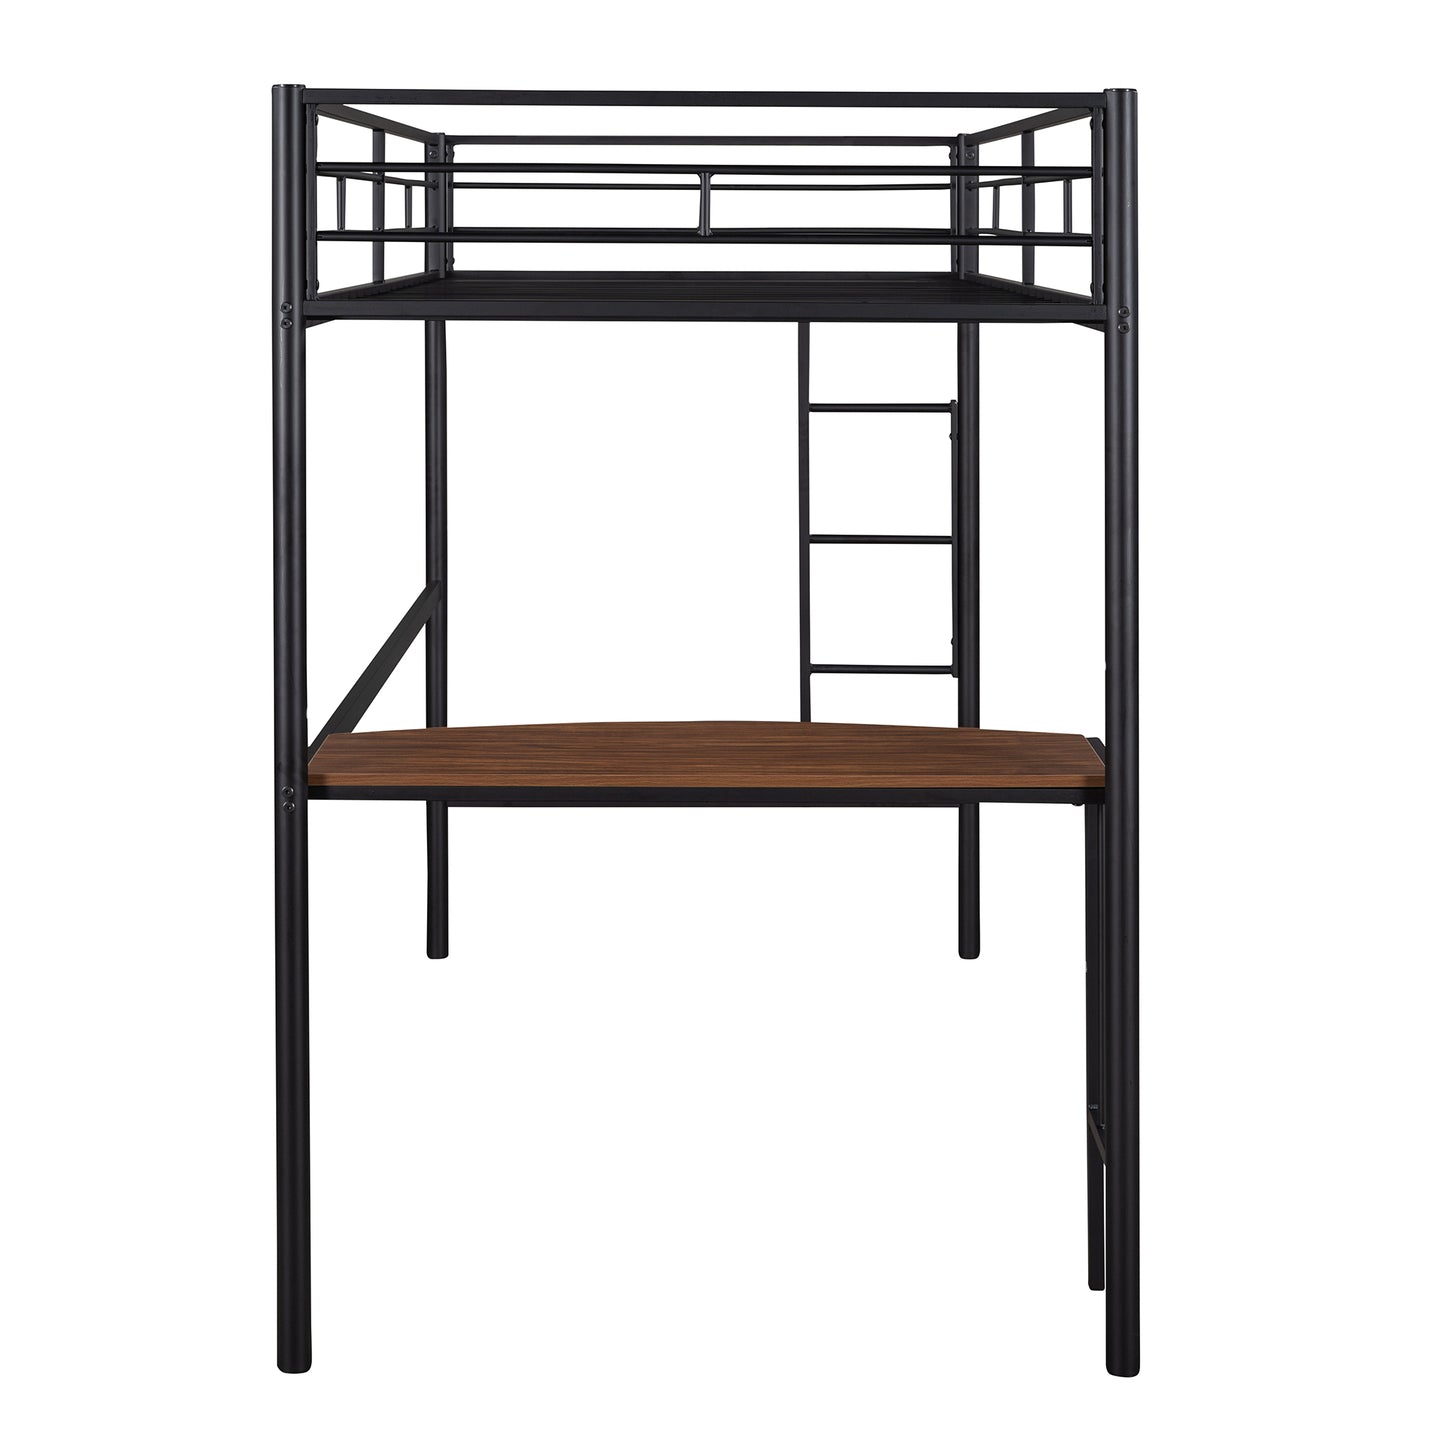 Loft Bed Twin Size, White Platform Bed Bunk Beds with Desk Ladder and Full-length Guardrail, Kids Loft Bed Toddler Bed for Boys Girls, LJ507